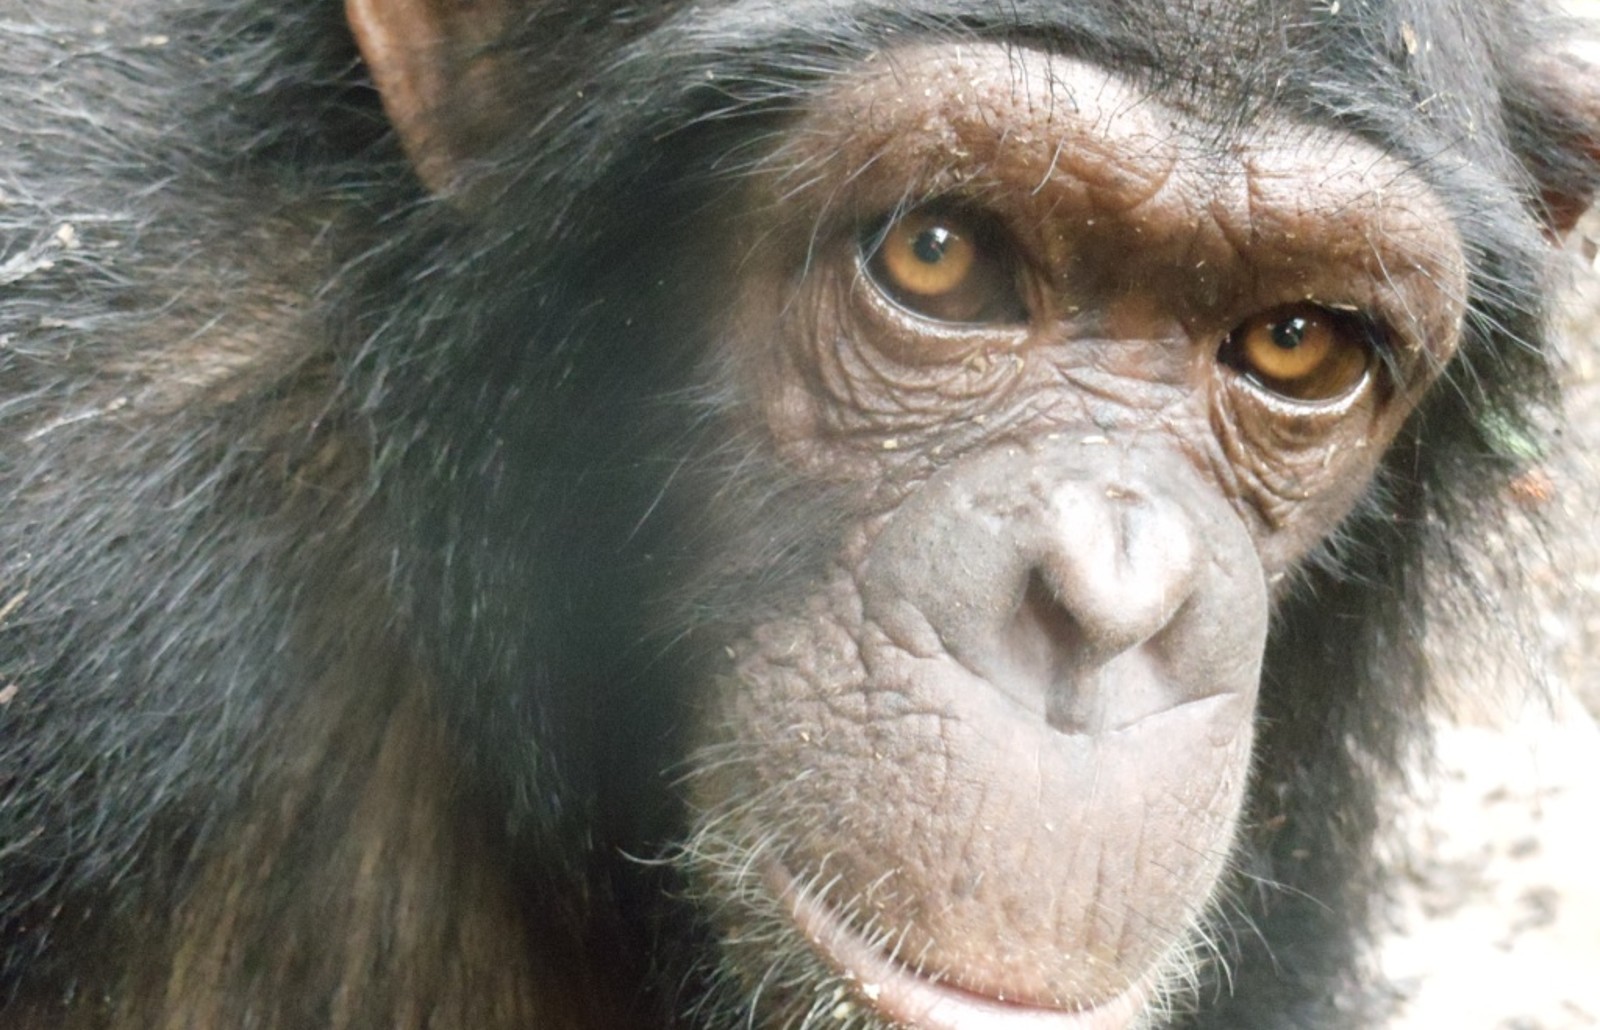 A close-up photo of a chimpanzee